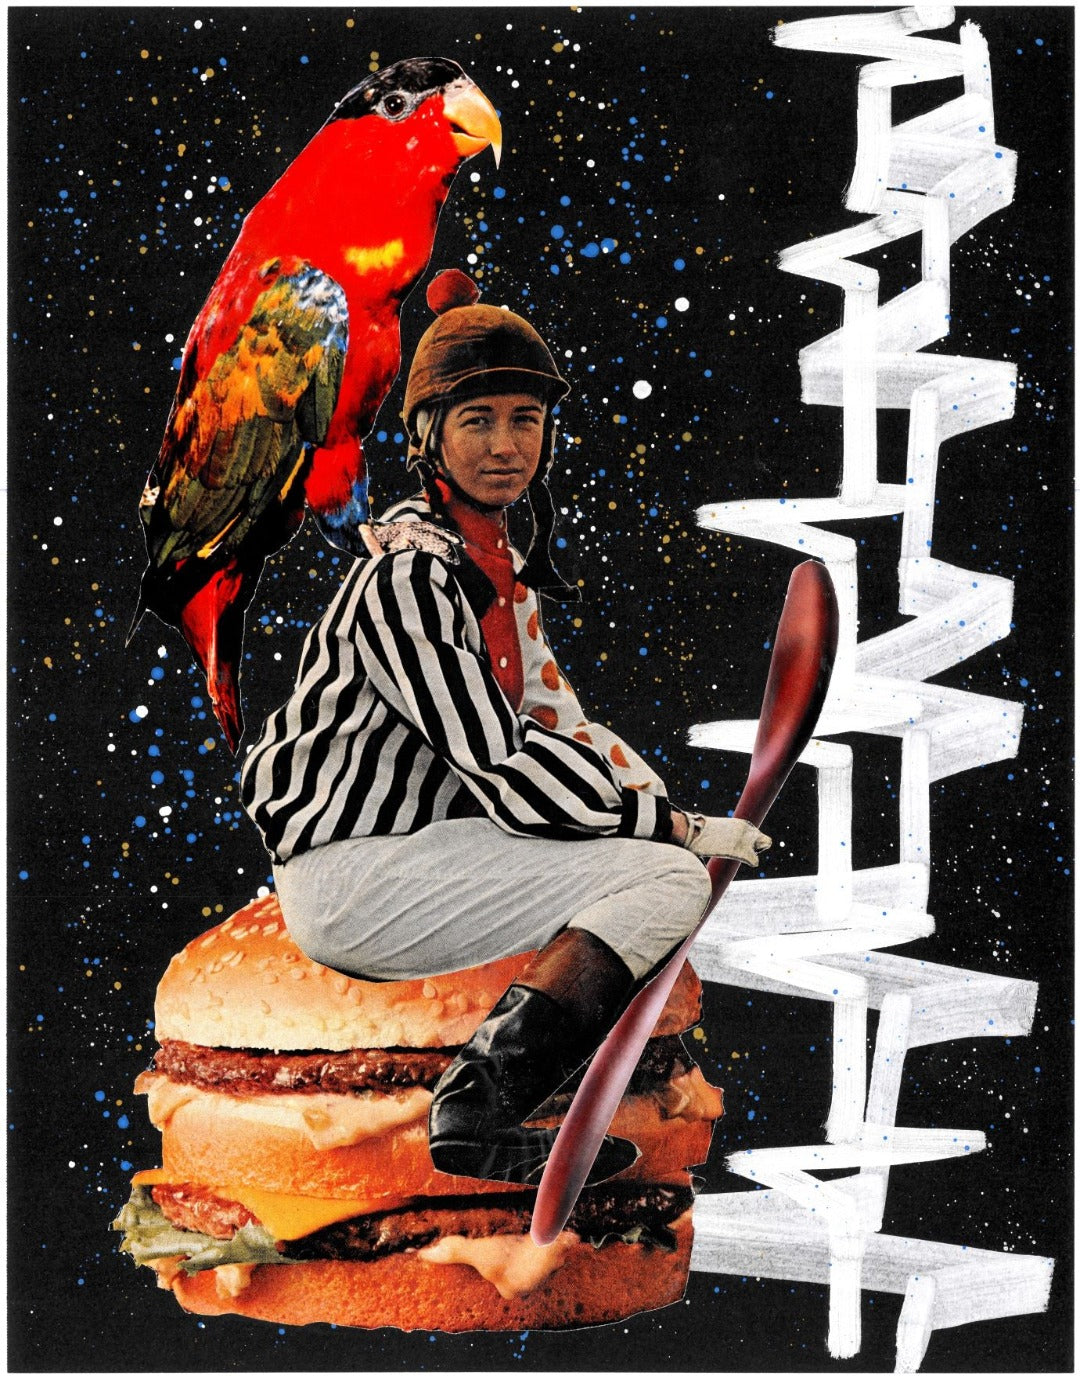 Bird, Jockey, Burger - Poster